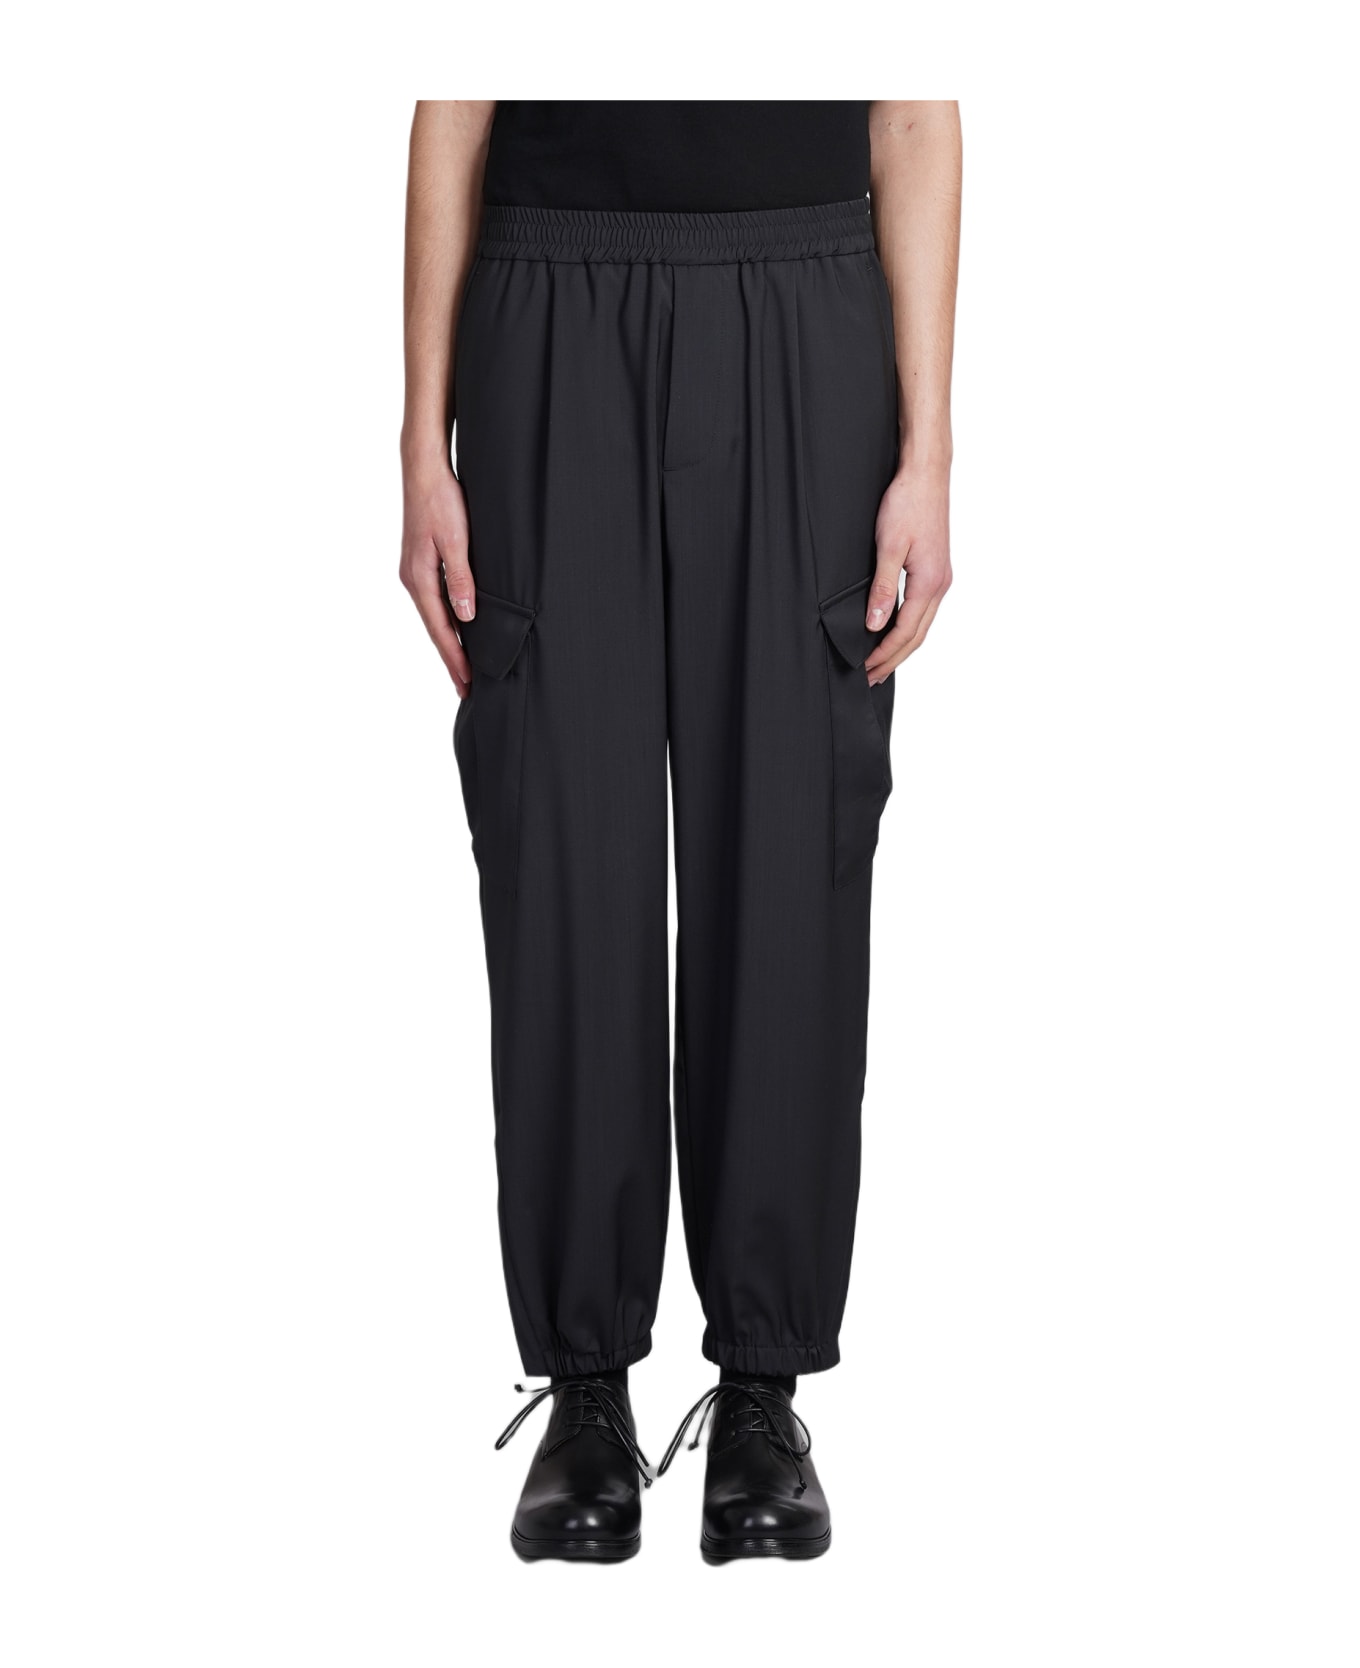 Barena Rambagio Pants In Black Wool - black スウェットパンツ